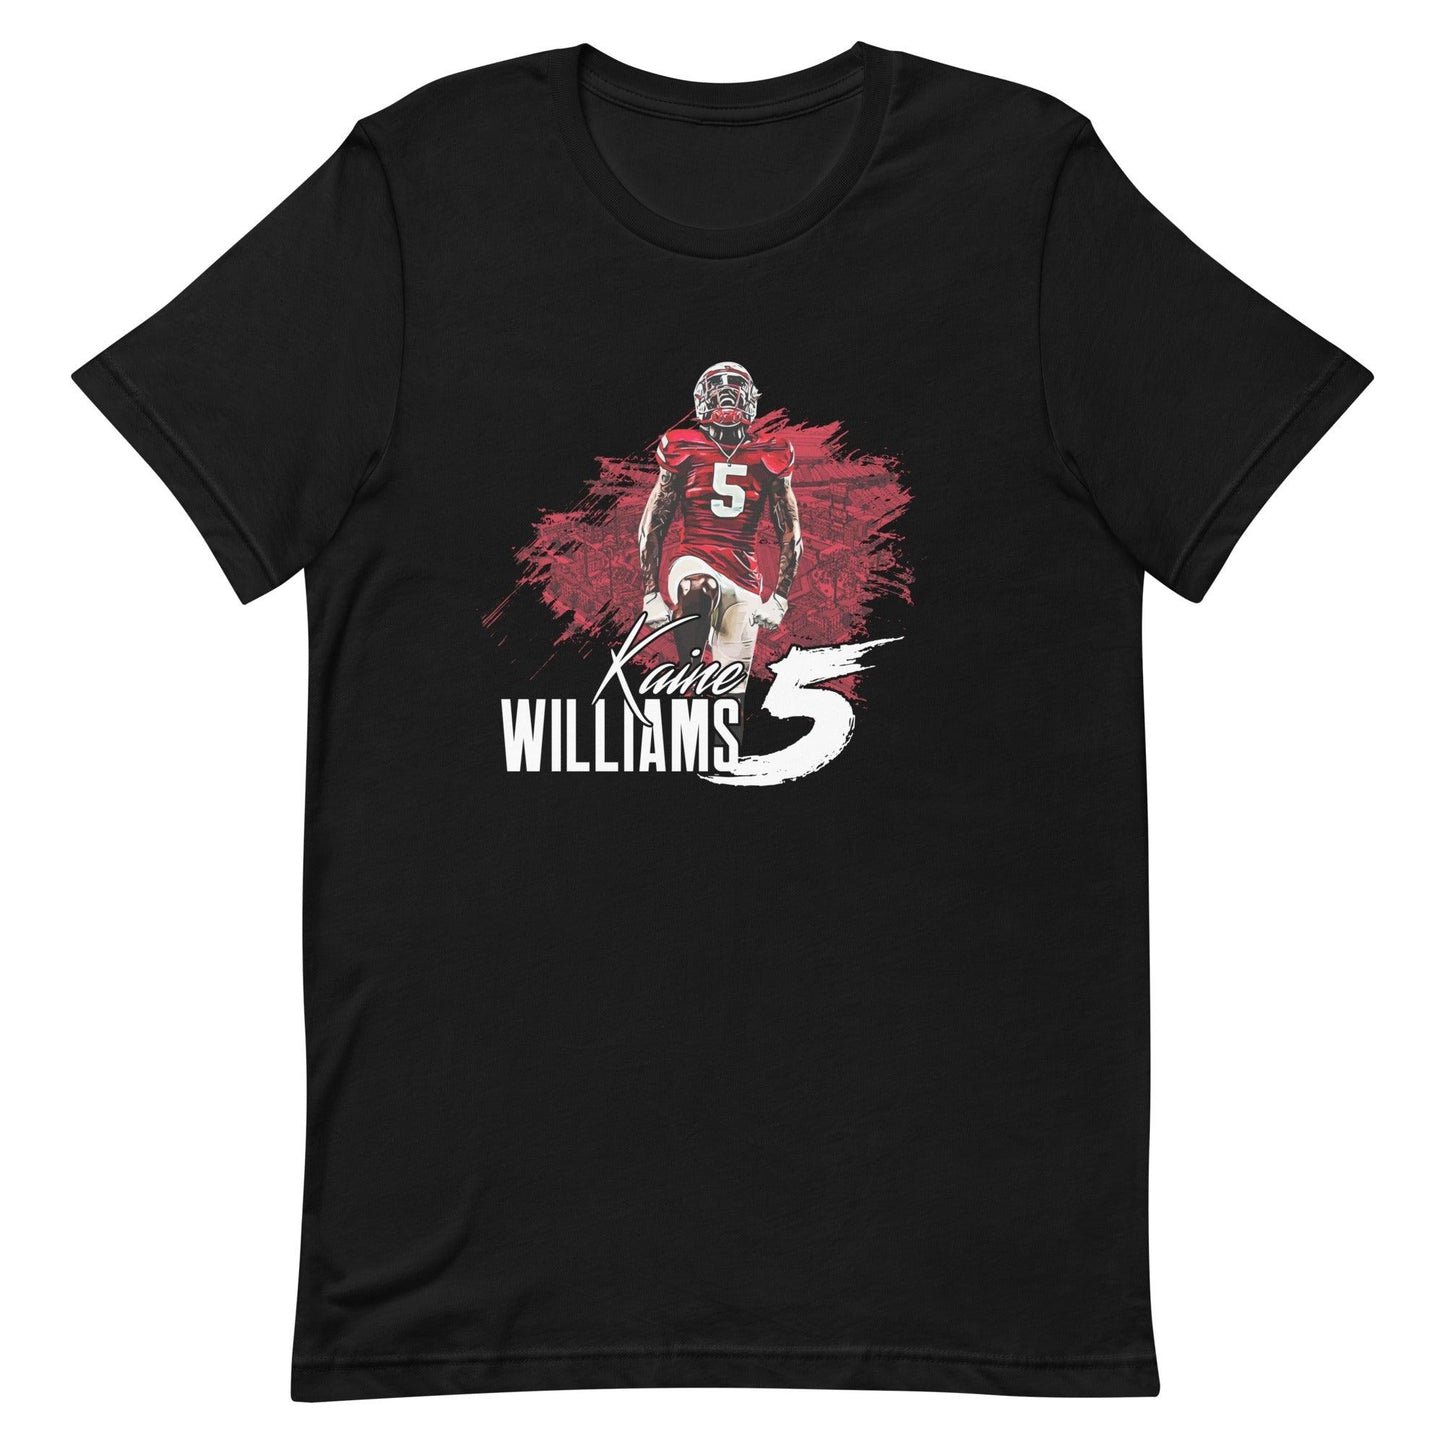 Kaine Williams "We Ready" t-shirt - Fan Arch